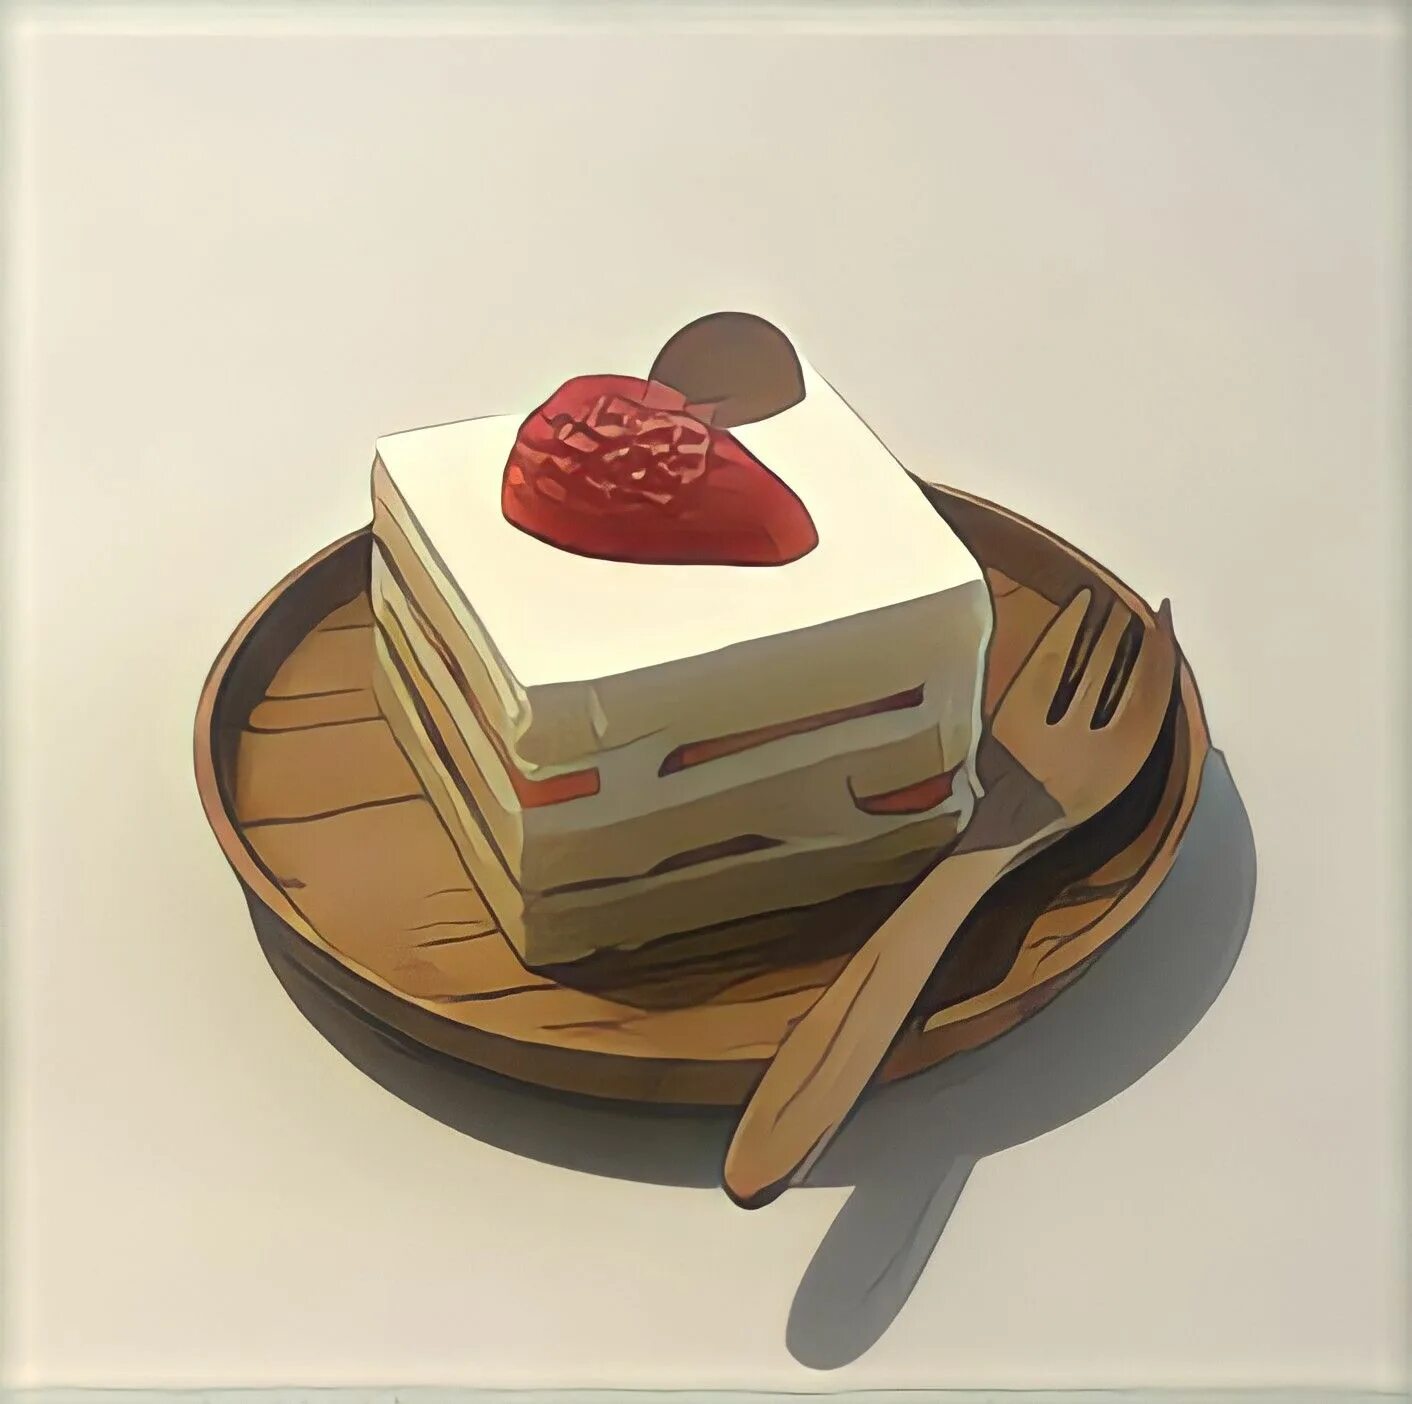 Dessert aesthetic. Little Cake 2022. Little Cake. Photo Strawberry Cake on a Wood. A little cake